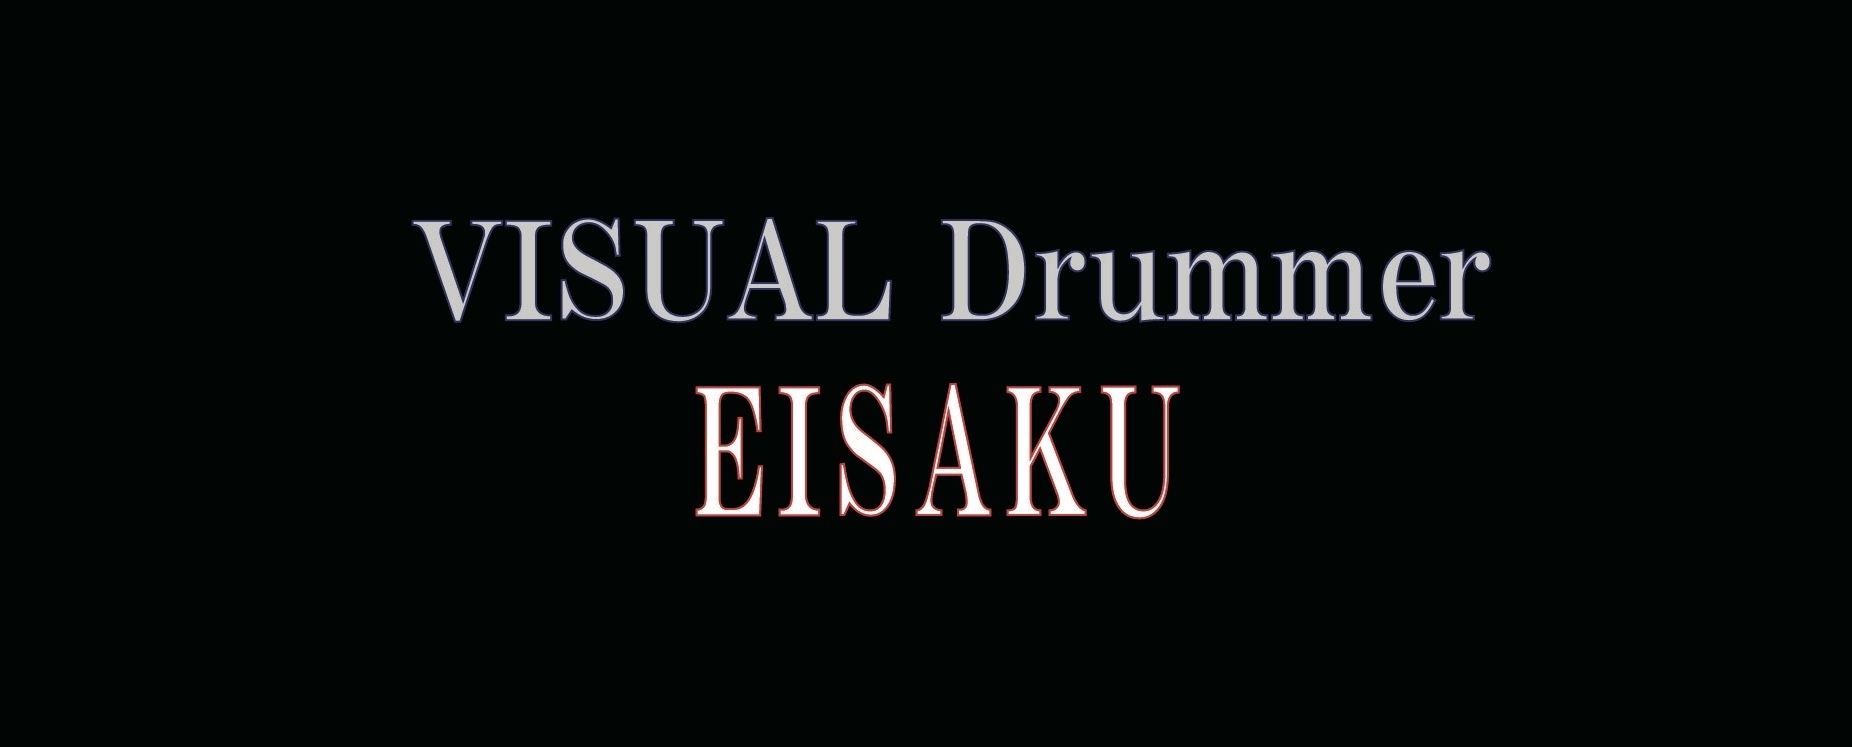 EISAKU Online Shop